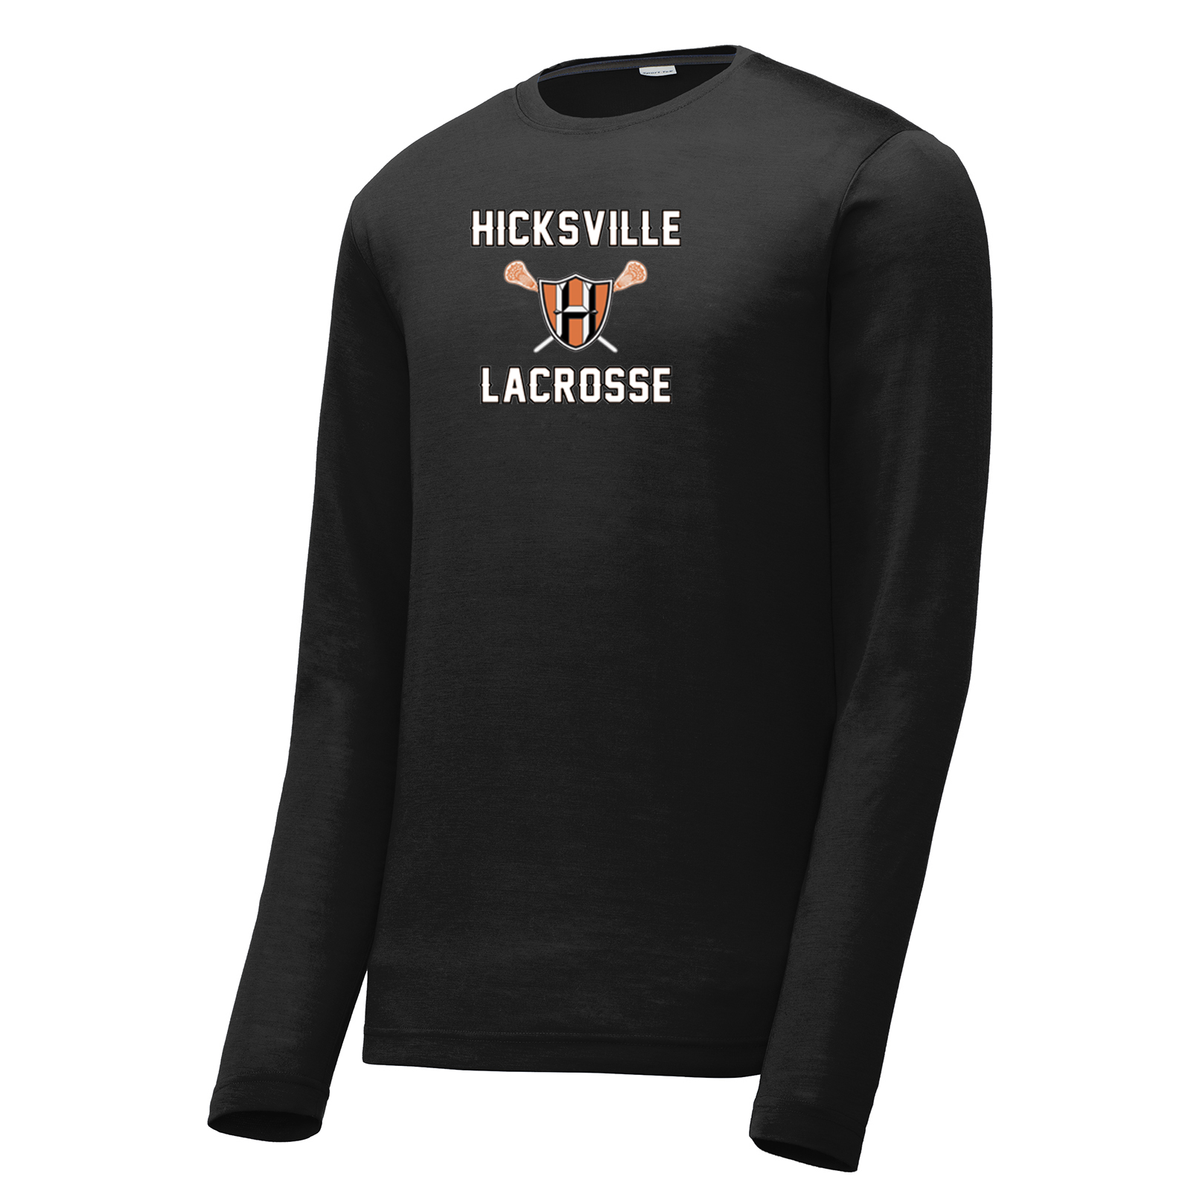 Hicksville Lacrosse Long Sleeve CottonTouch Performance Shirt